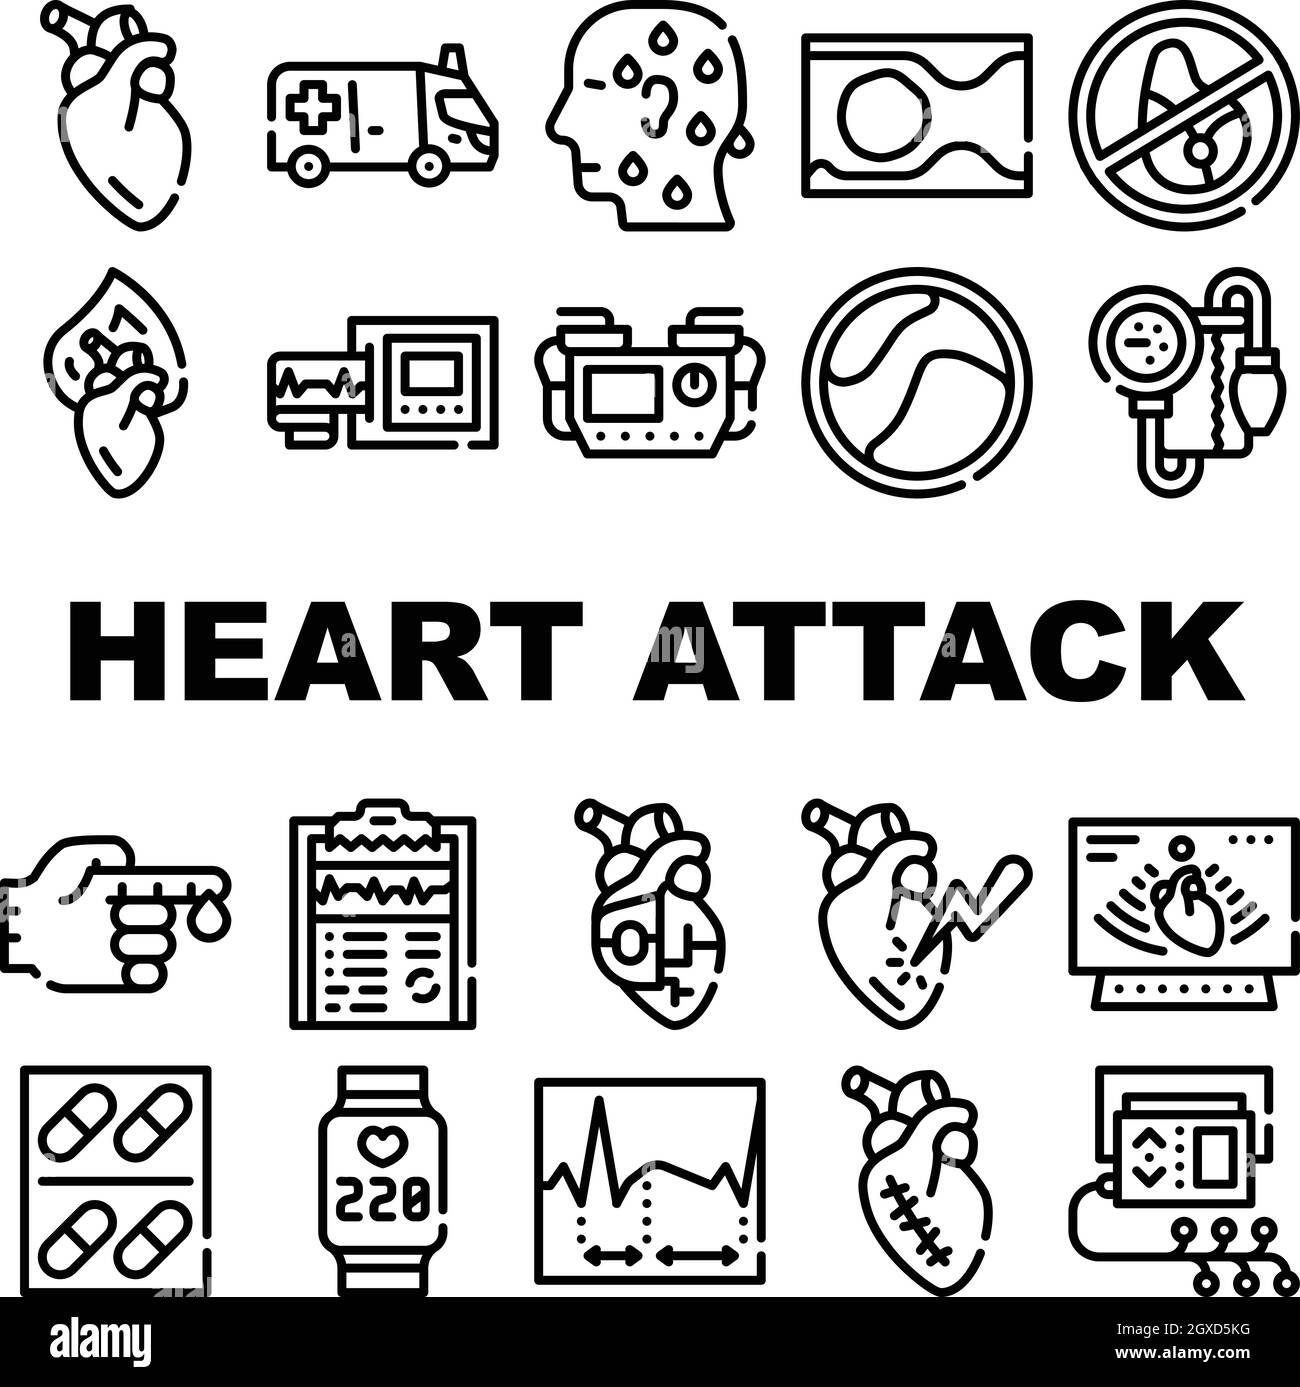 Heart Attack Disease Collection Icons Set Vector Stock Vector